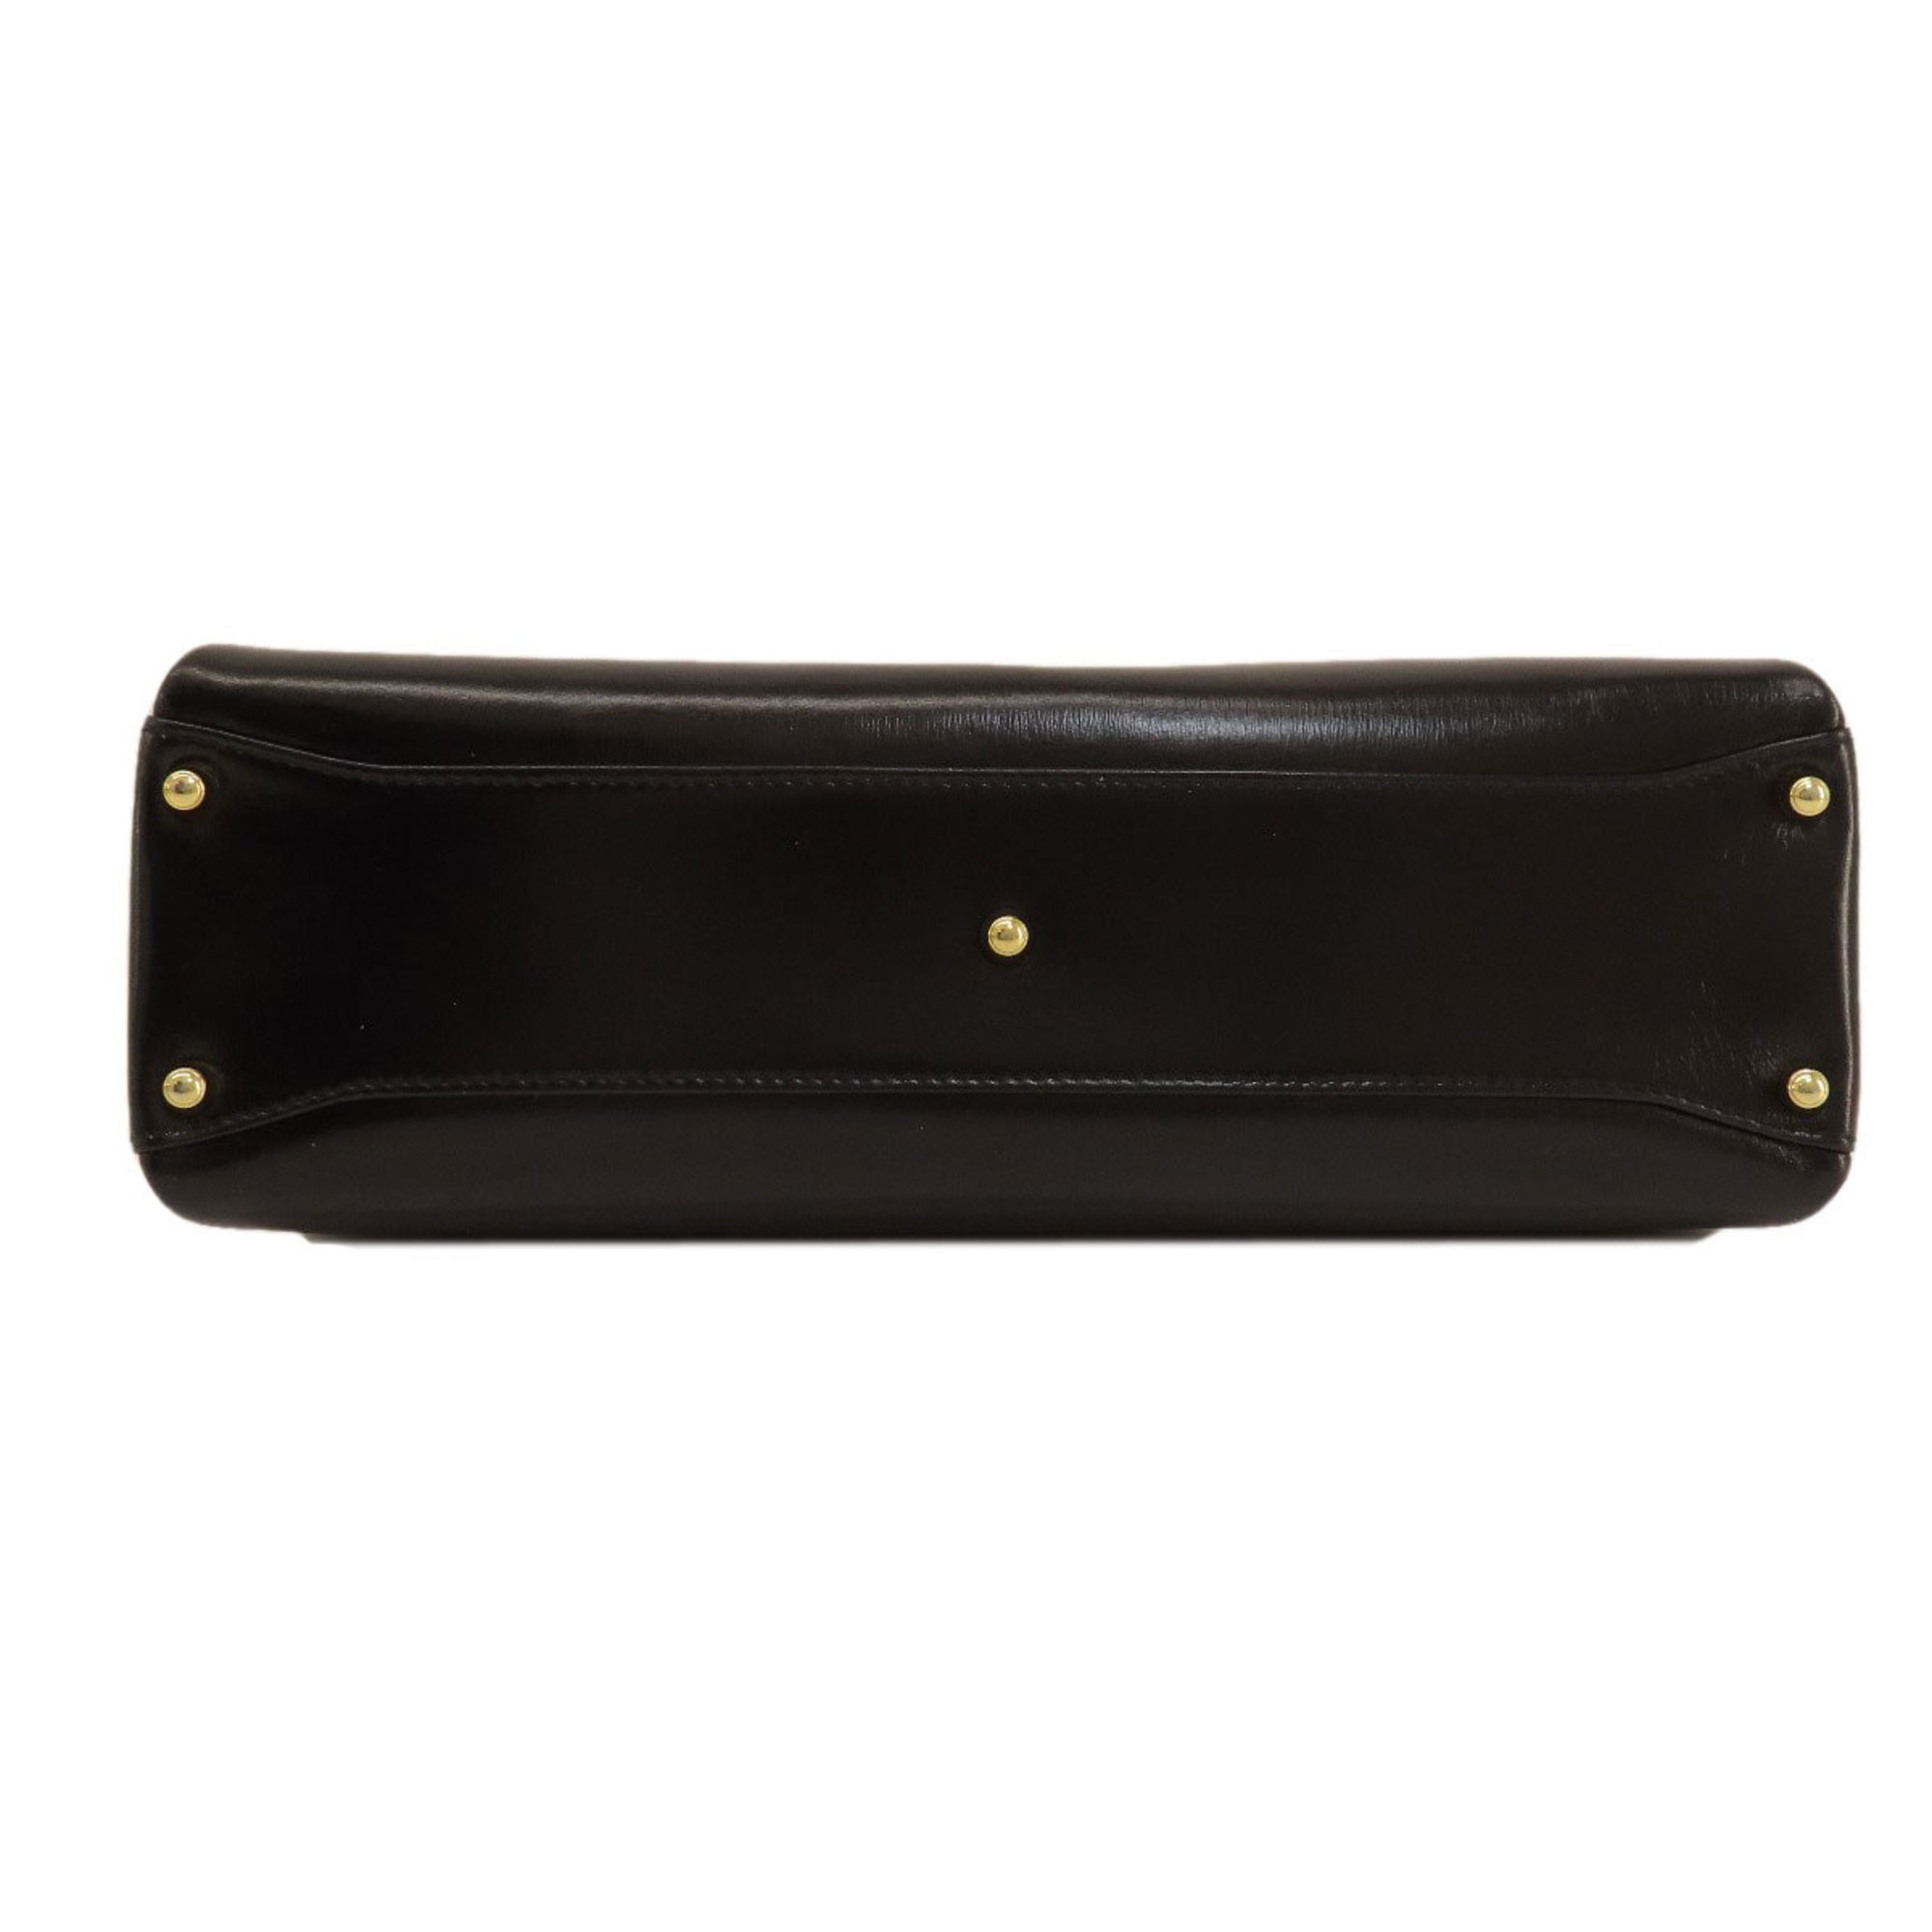 Gucci 000 926 1539 G hardware handbag leather ladies